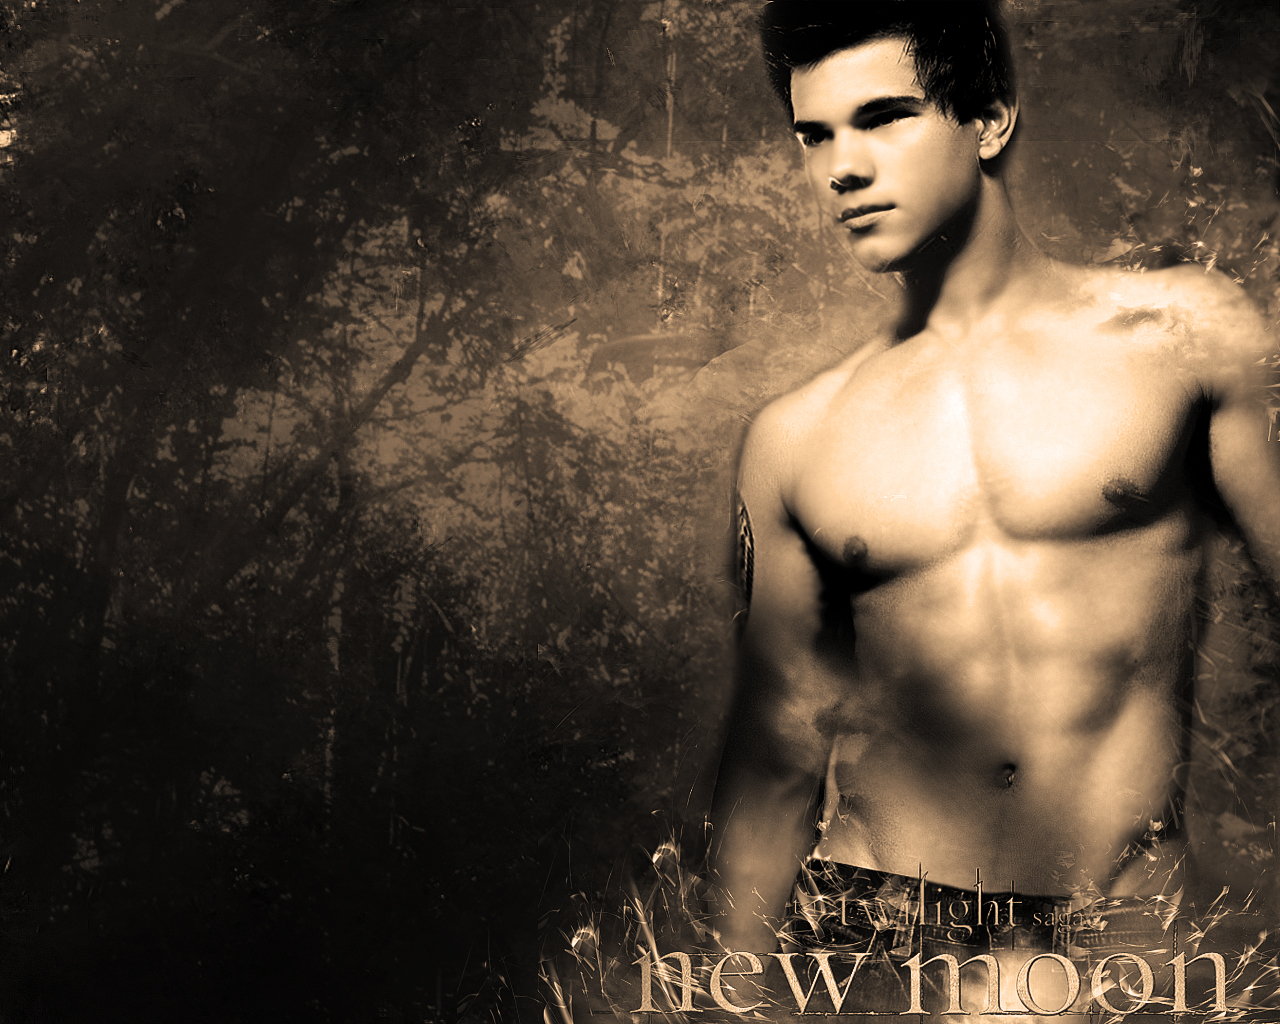 Taylor Lautner Shirt Off New Moon Wallpaper Image